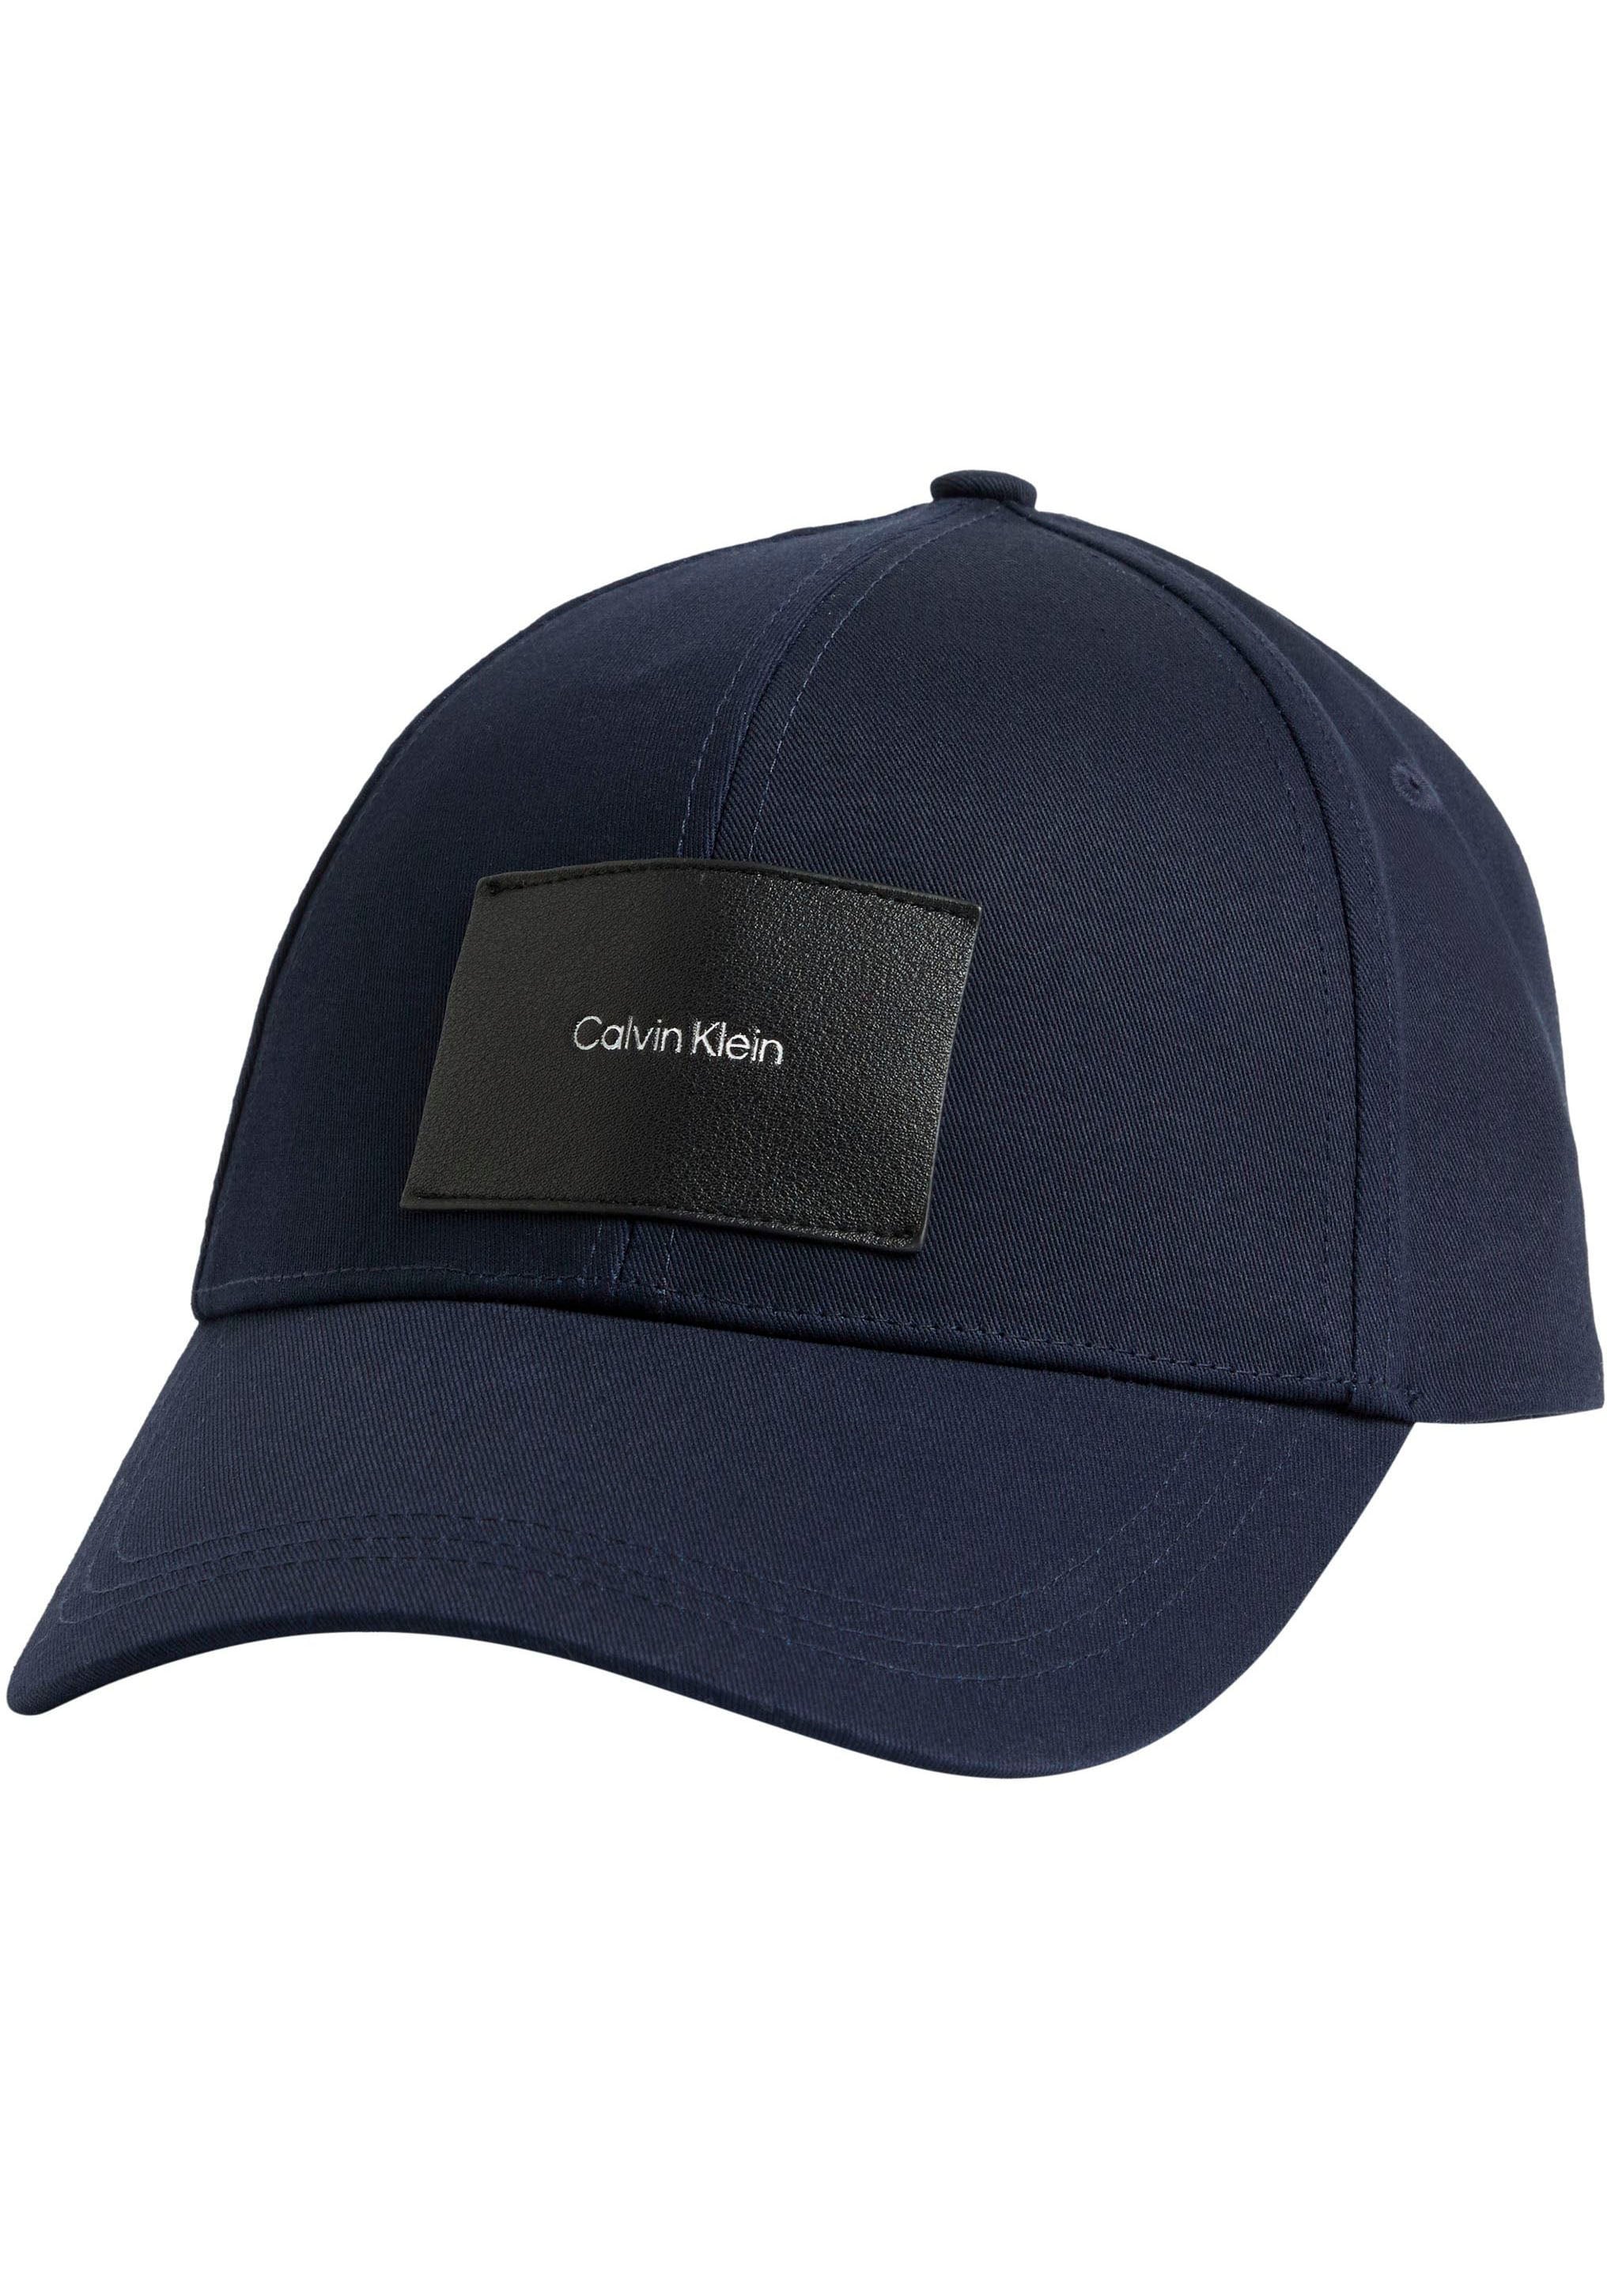 BB CAP«, Logobadge ♕ bei Klein Flex »CK Calvin mit PATCH prägnantem Cap